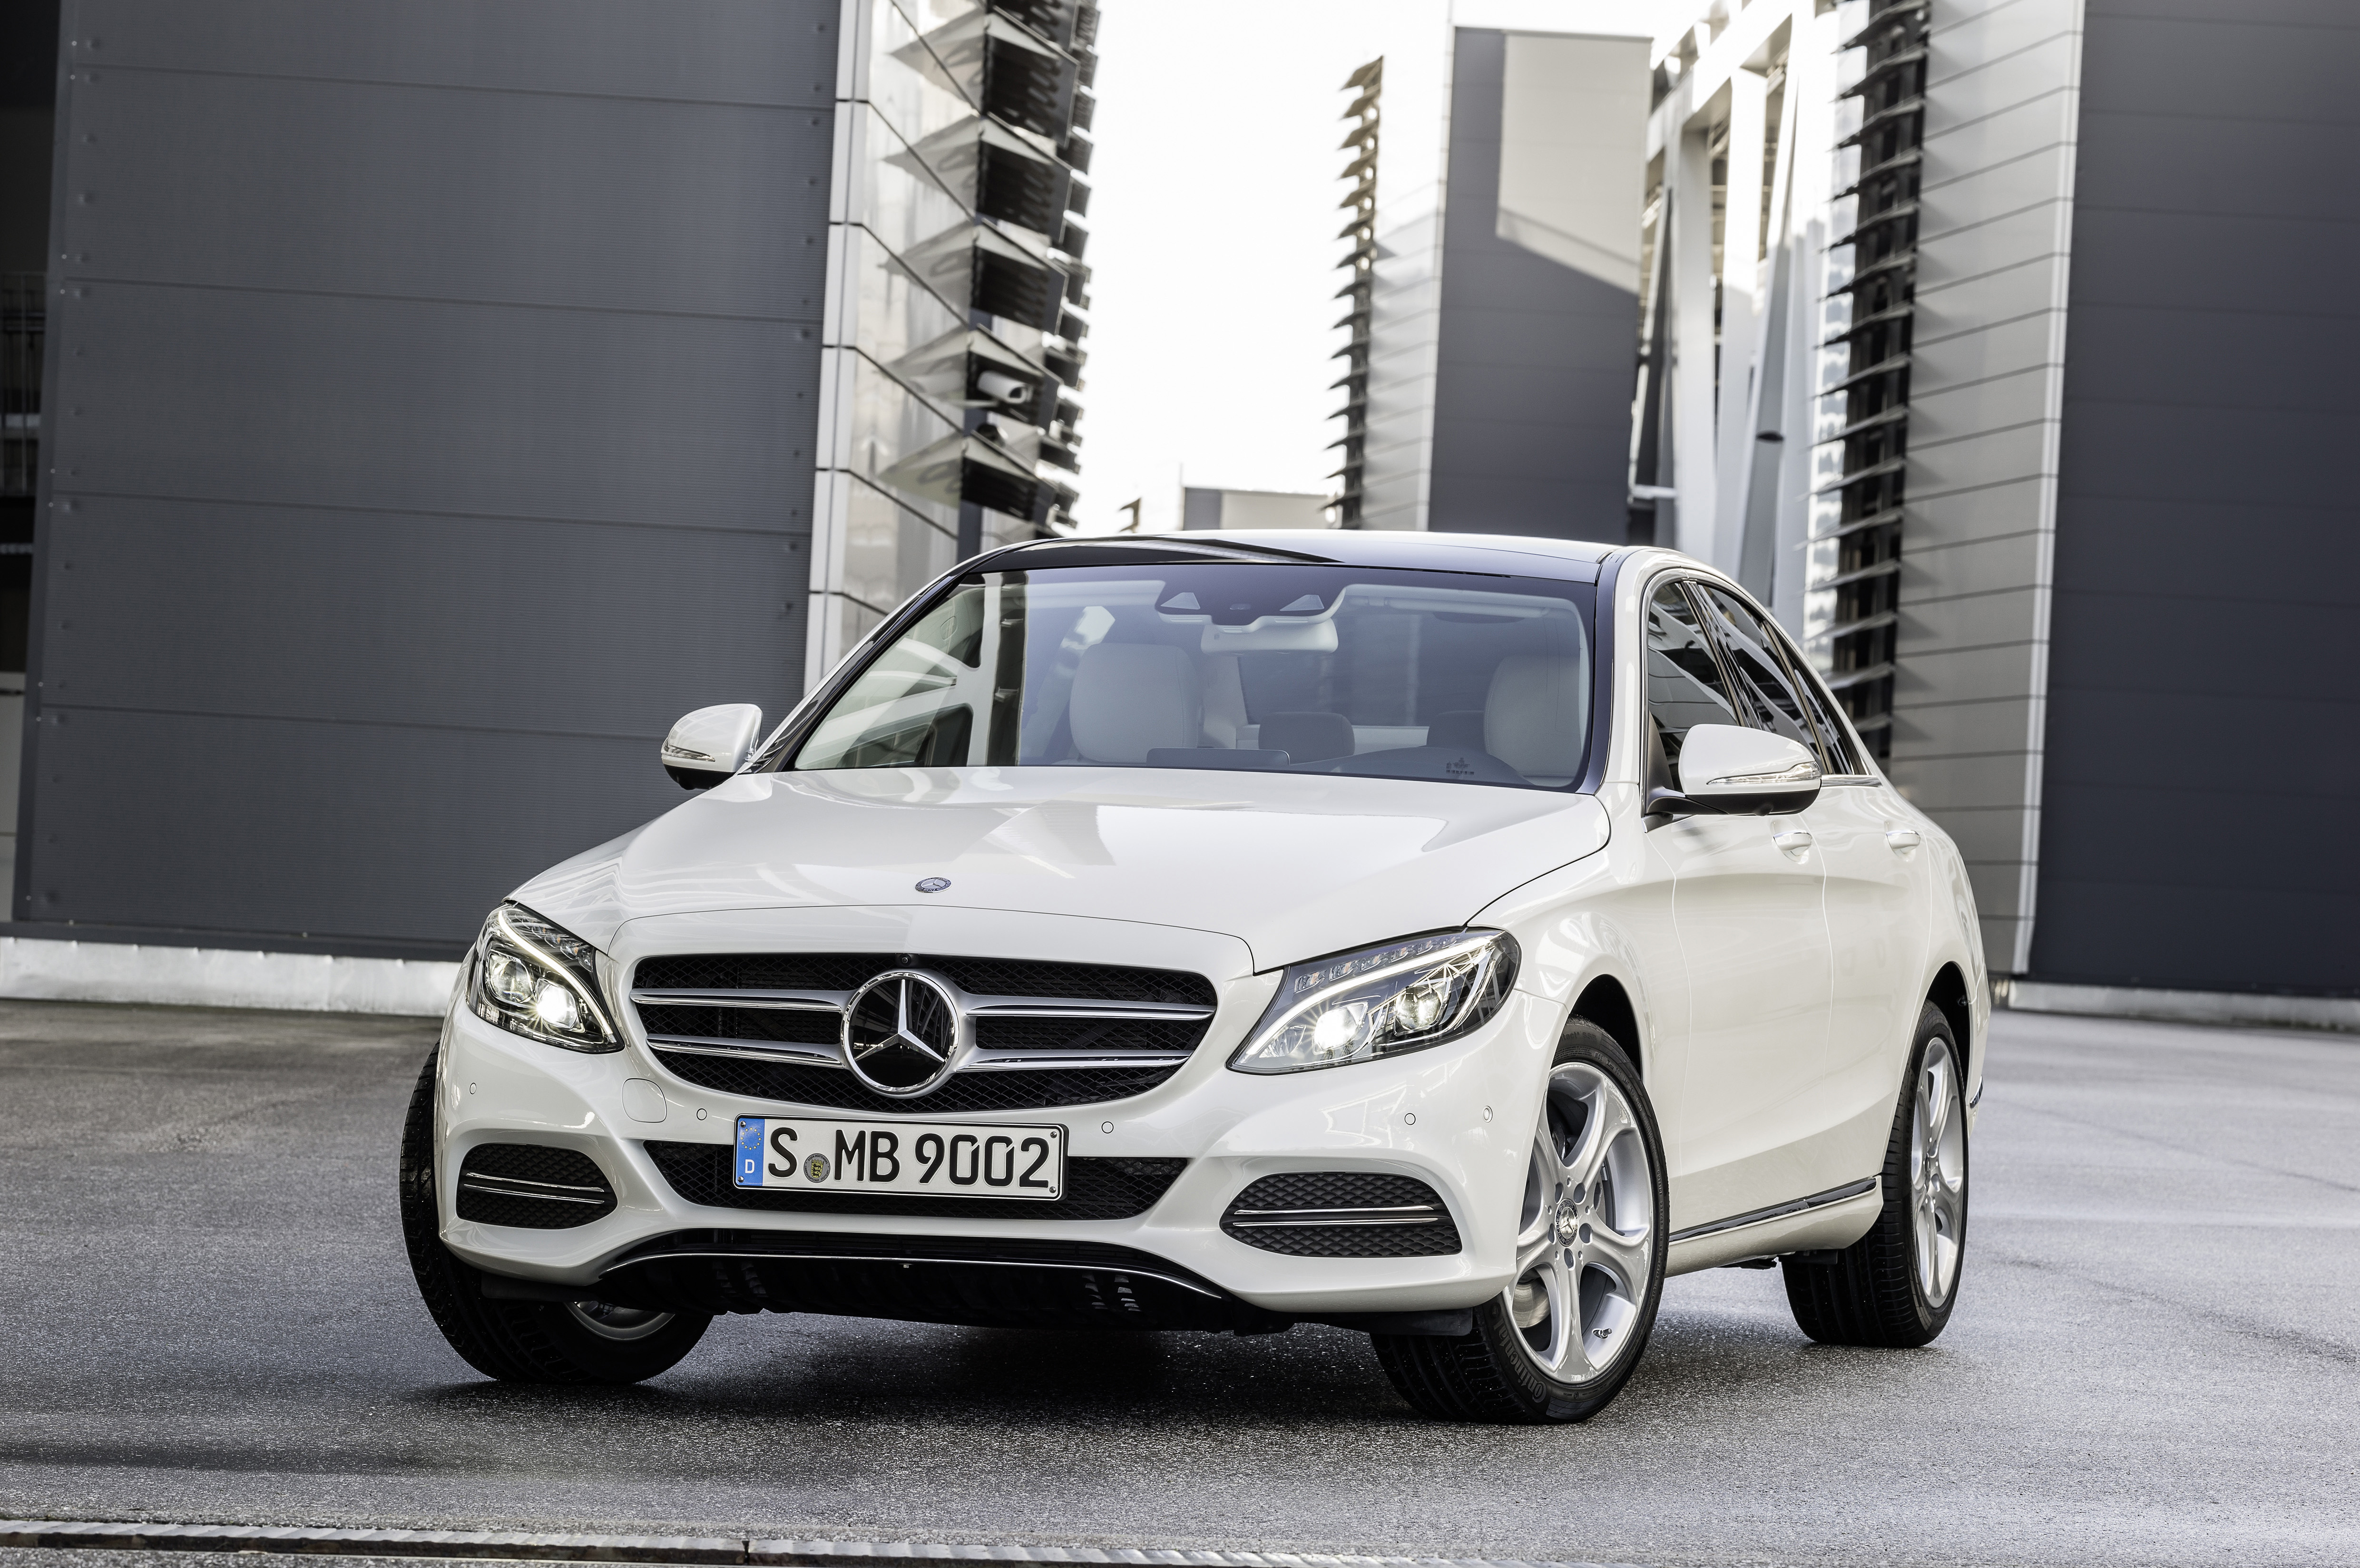 Mercedes ц. Mercedes-Benz c-class (w205). Mercedes Benz c250 w205. Mercedes c class w205. Mercedes-Benz c-class 2015.